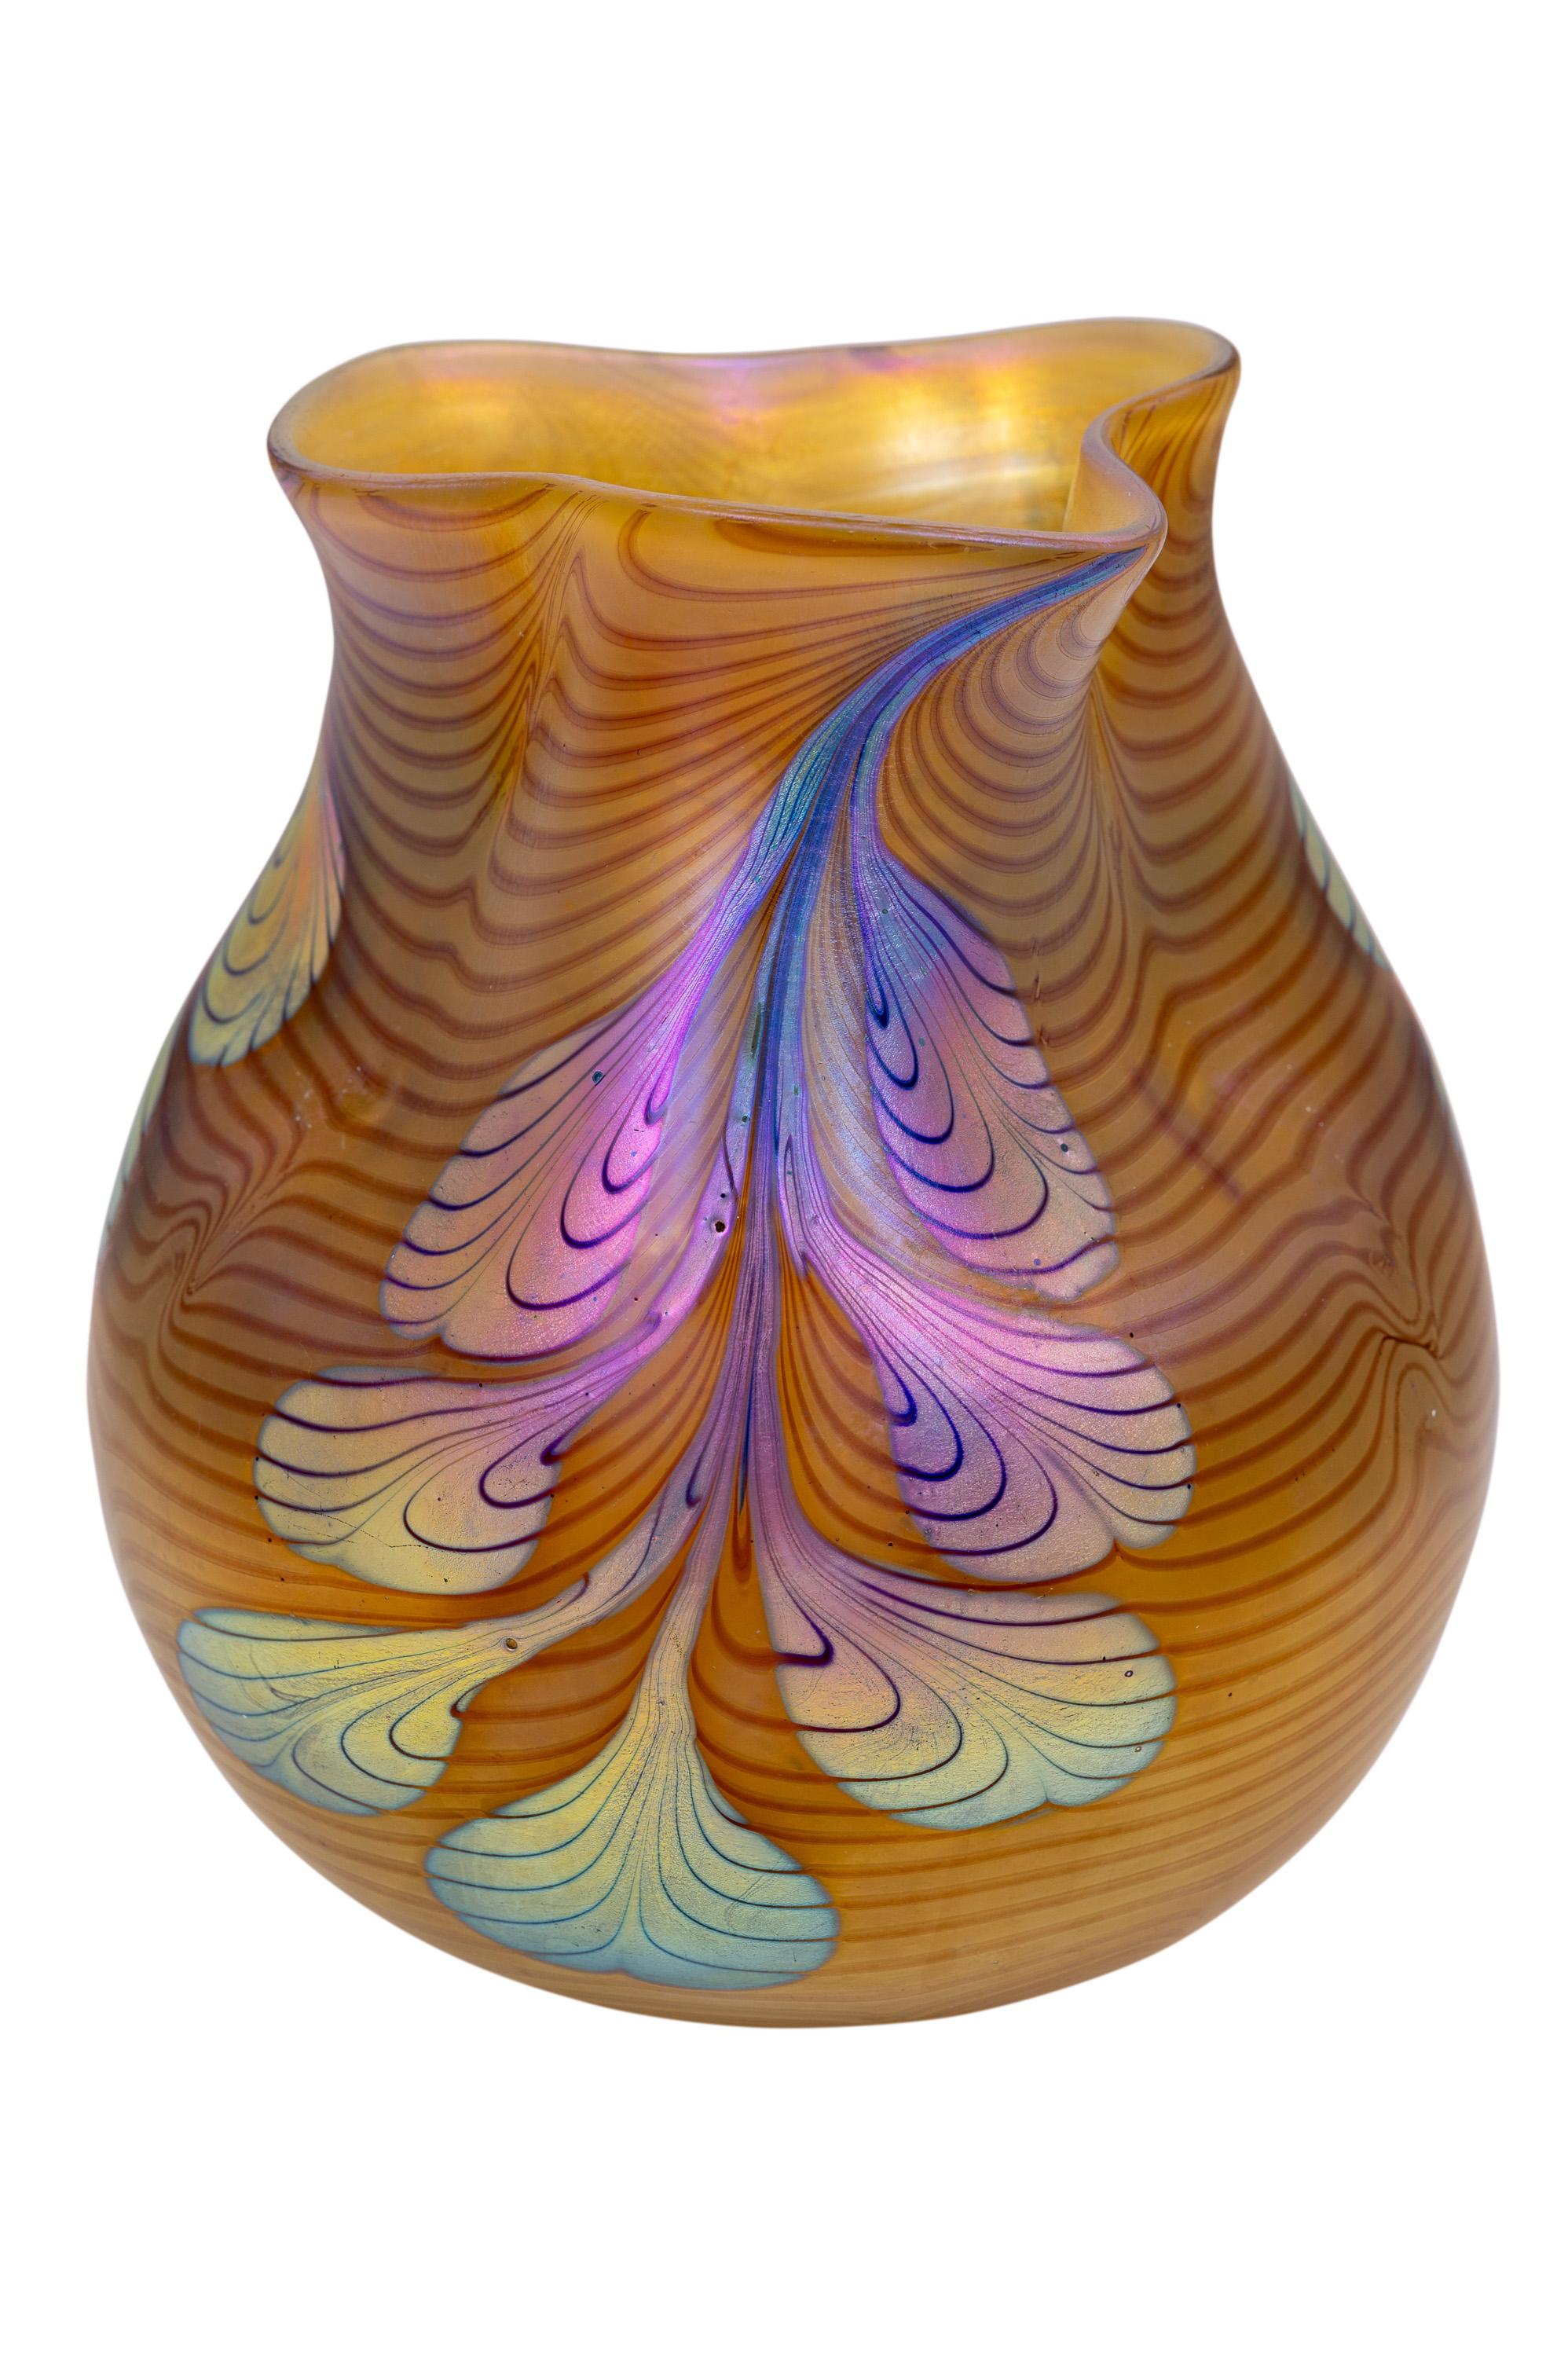 Jugendstil Bohemian Glass Vase Loetz circa 1903/4 Viennese Art Nouveau